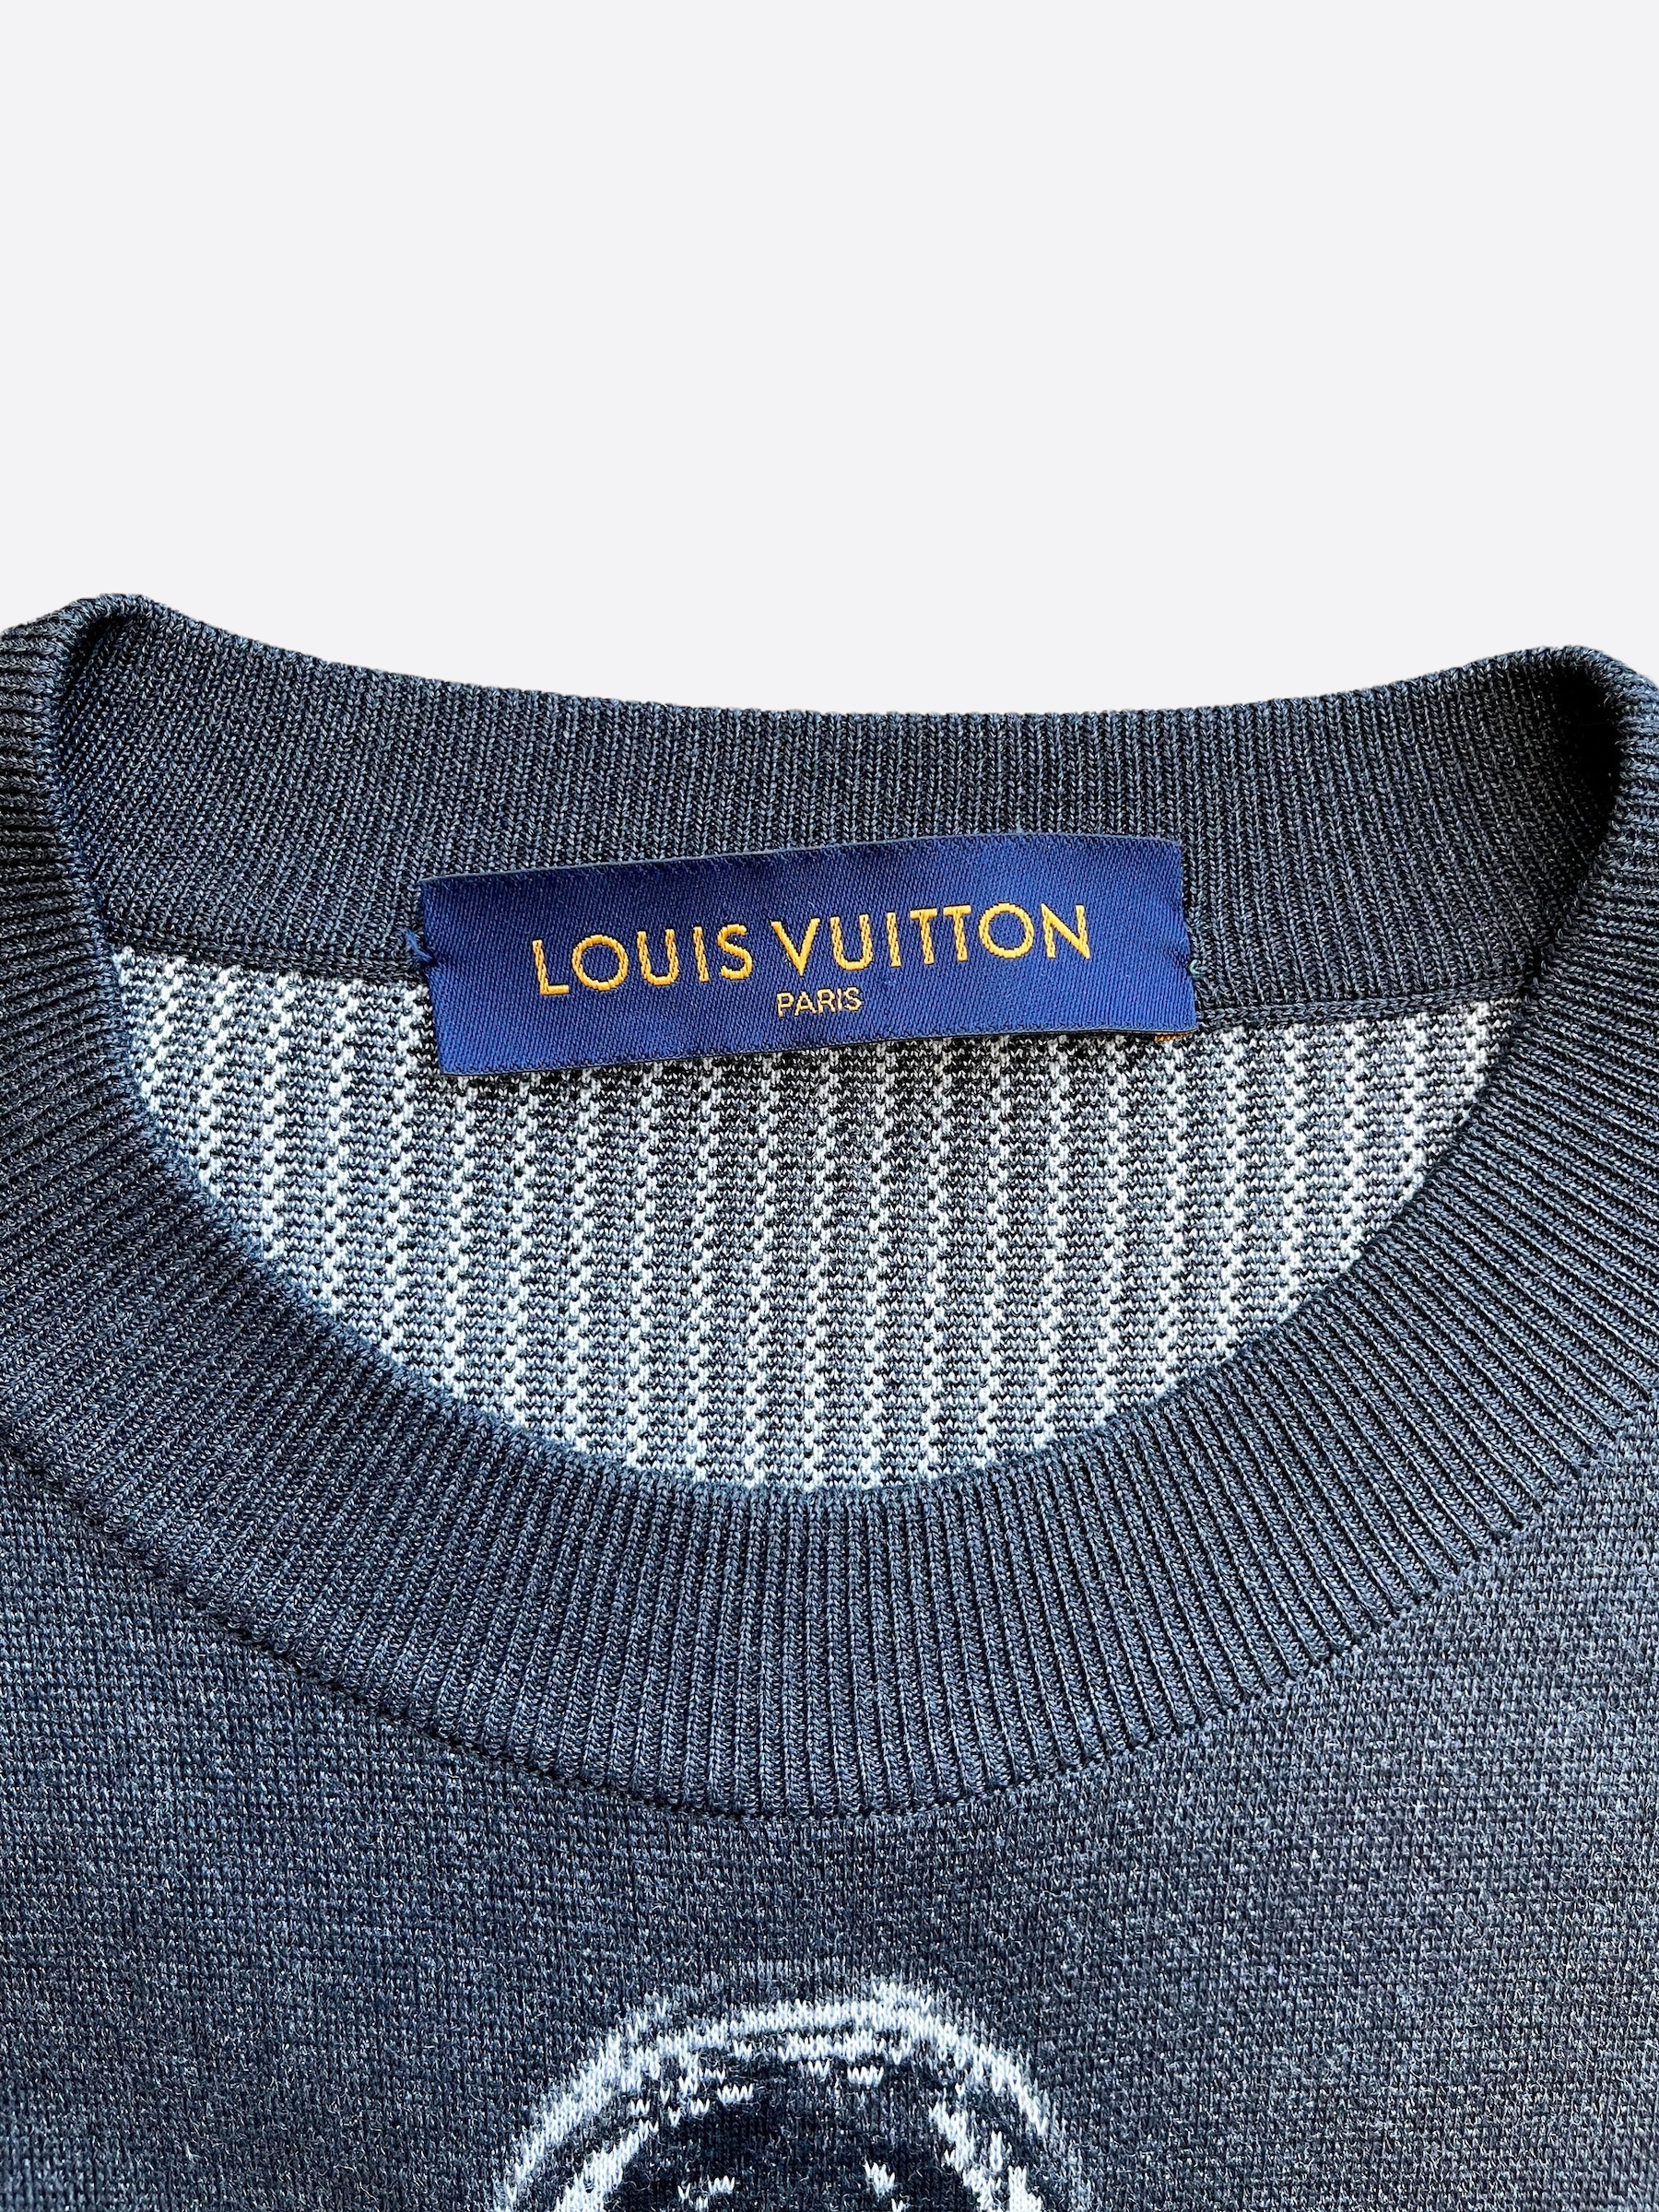 Louis Vuitton men's grey and black astronaut motif wool jumper